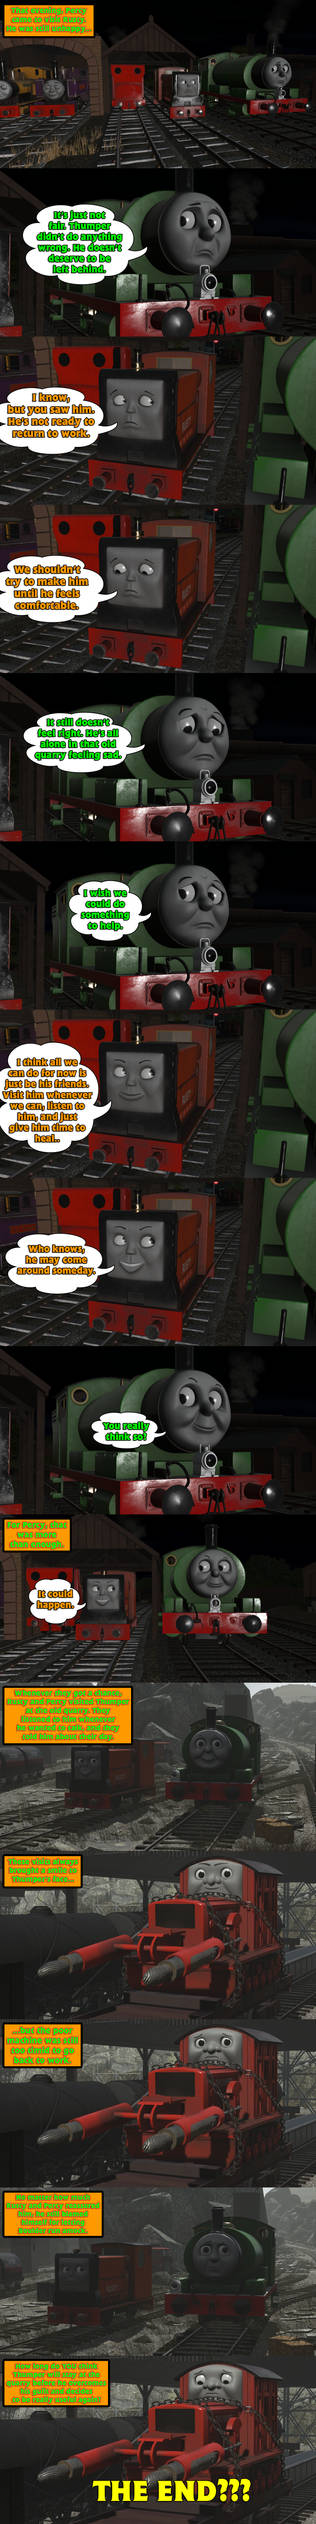 Thomas' Comic Adventures 32 - Left Behind 5/5